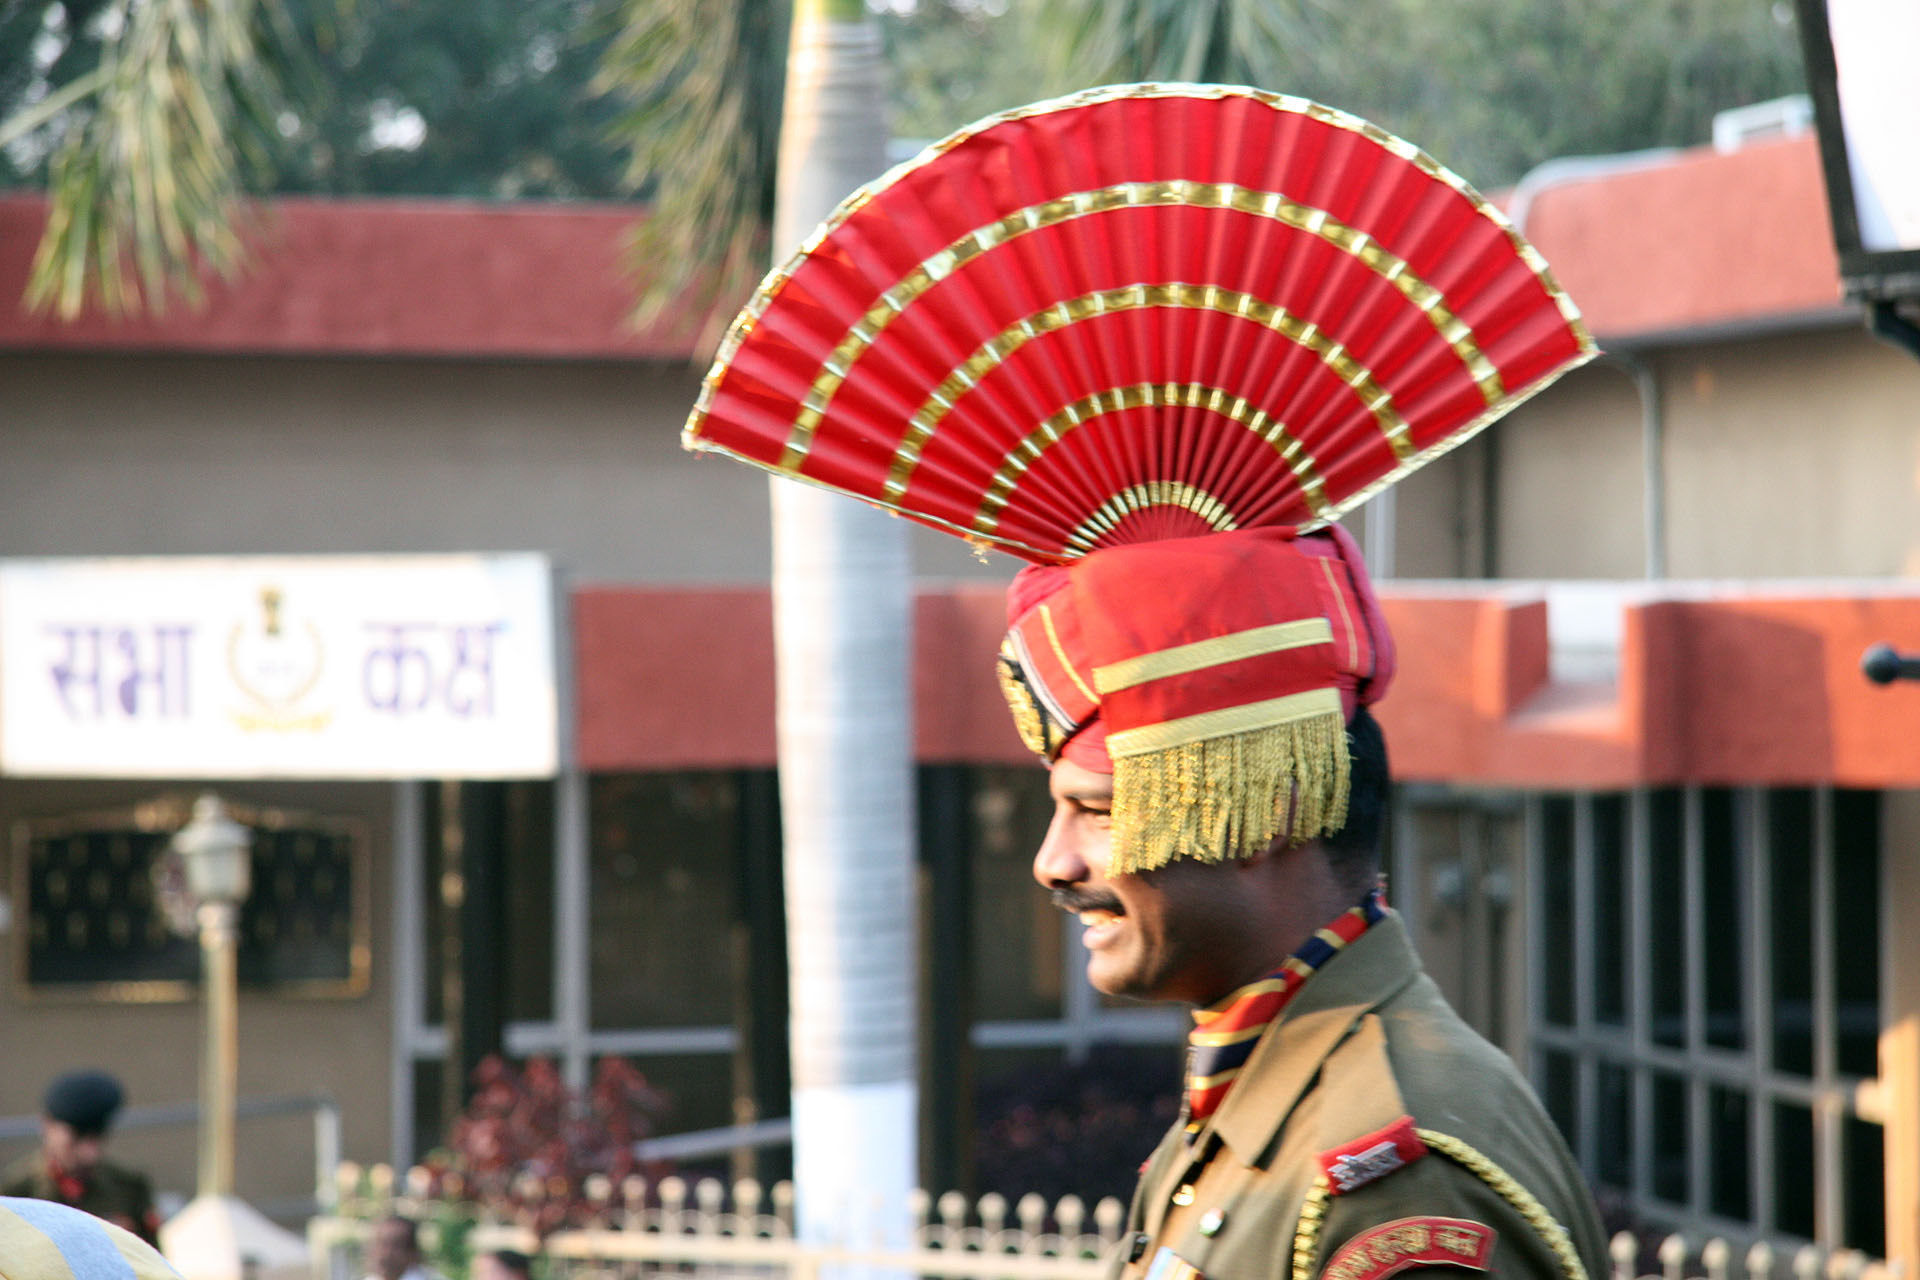 Wagah Border closing ceremony - Indian Guard